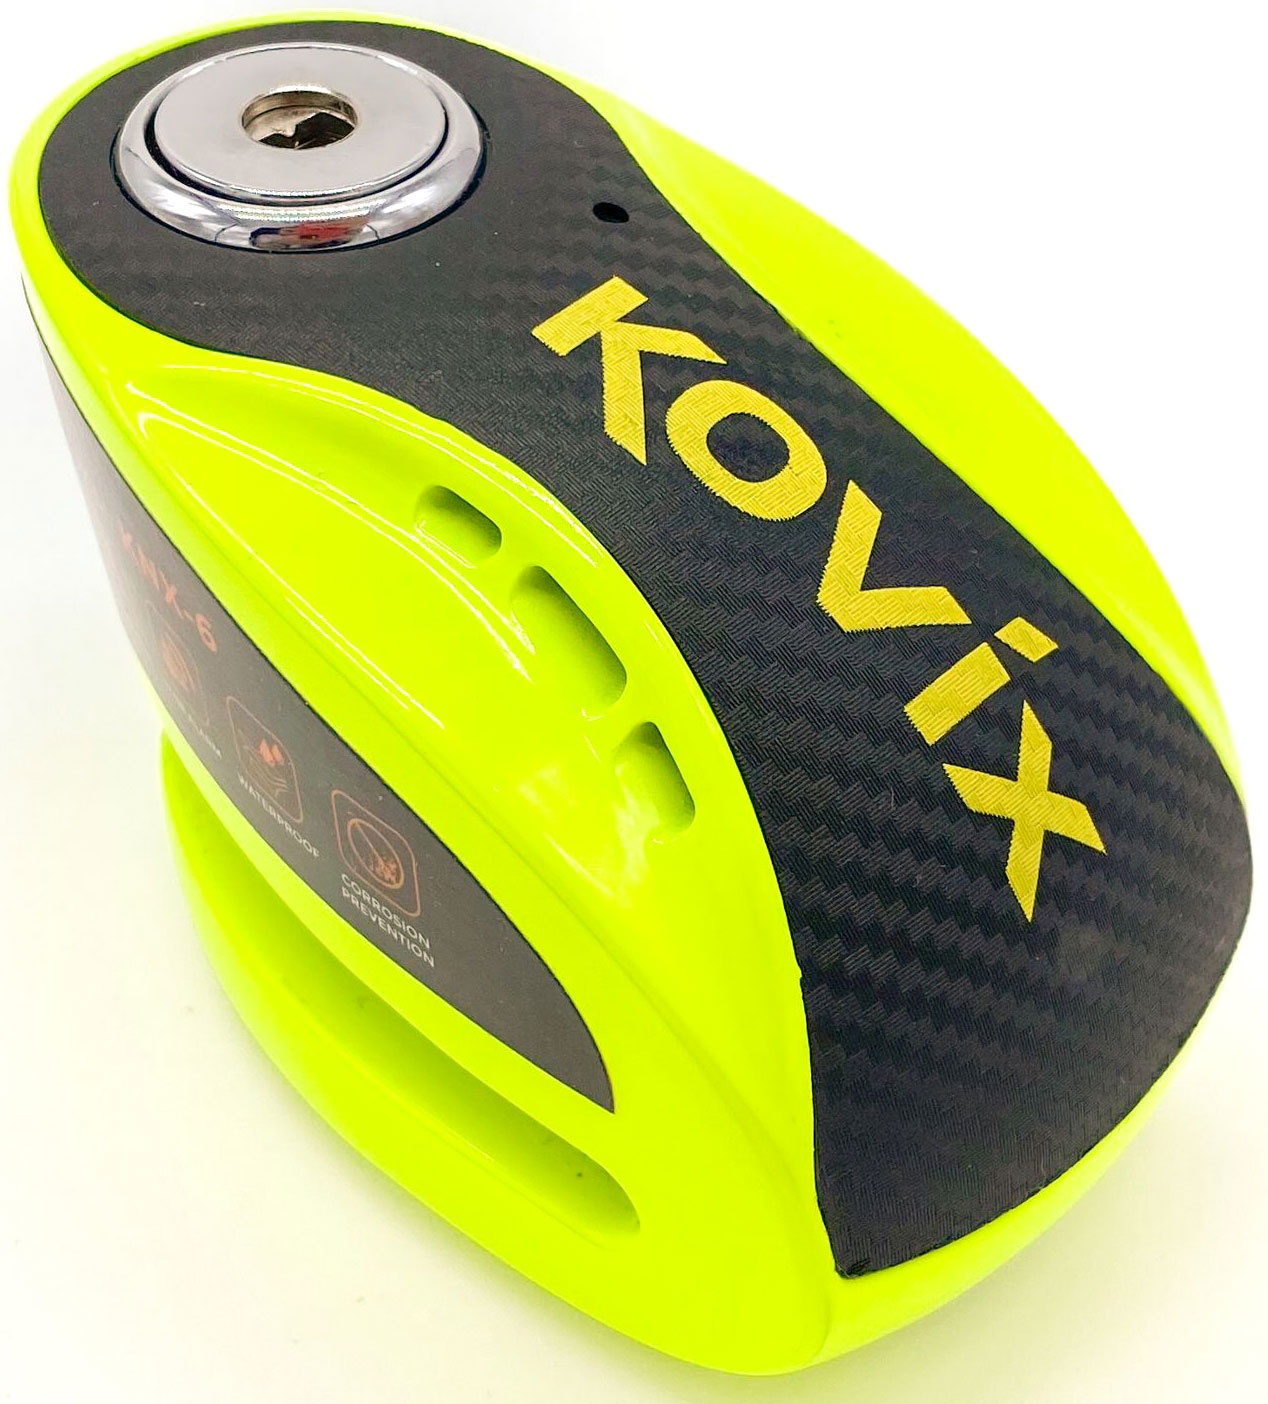 Kovix KNX6, alarme frein-disque - Argent/Noir